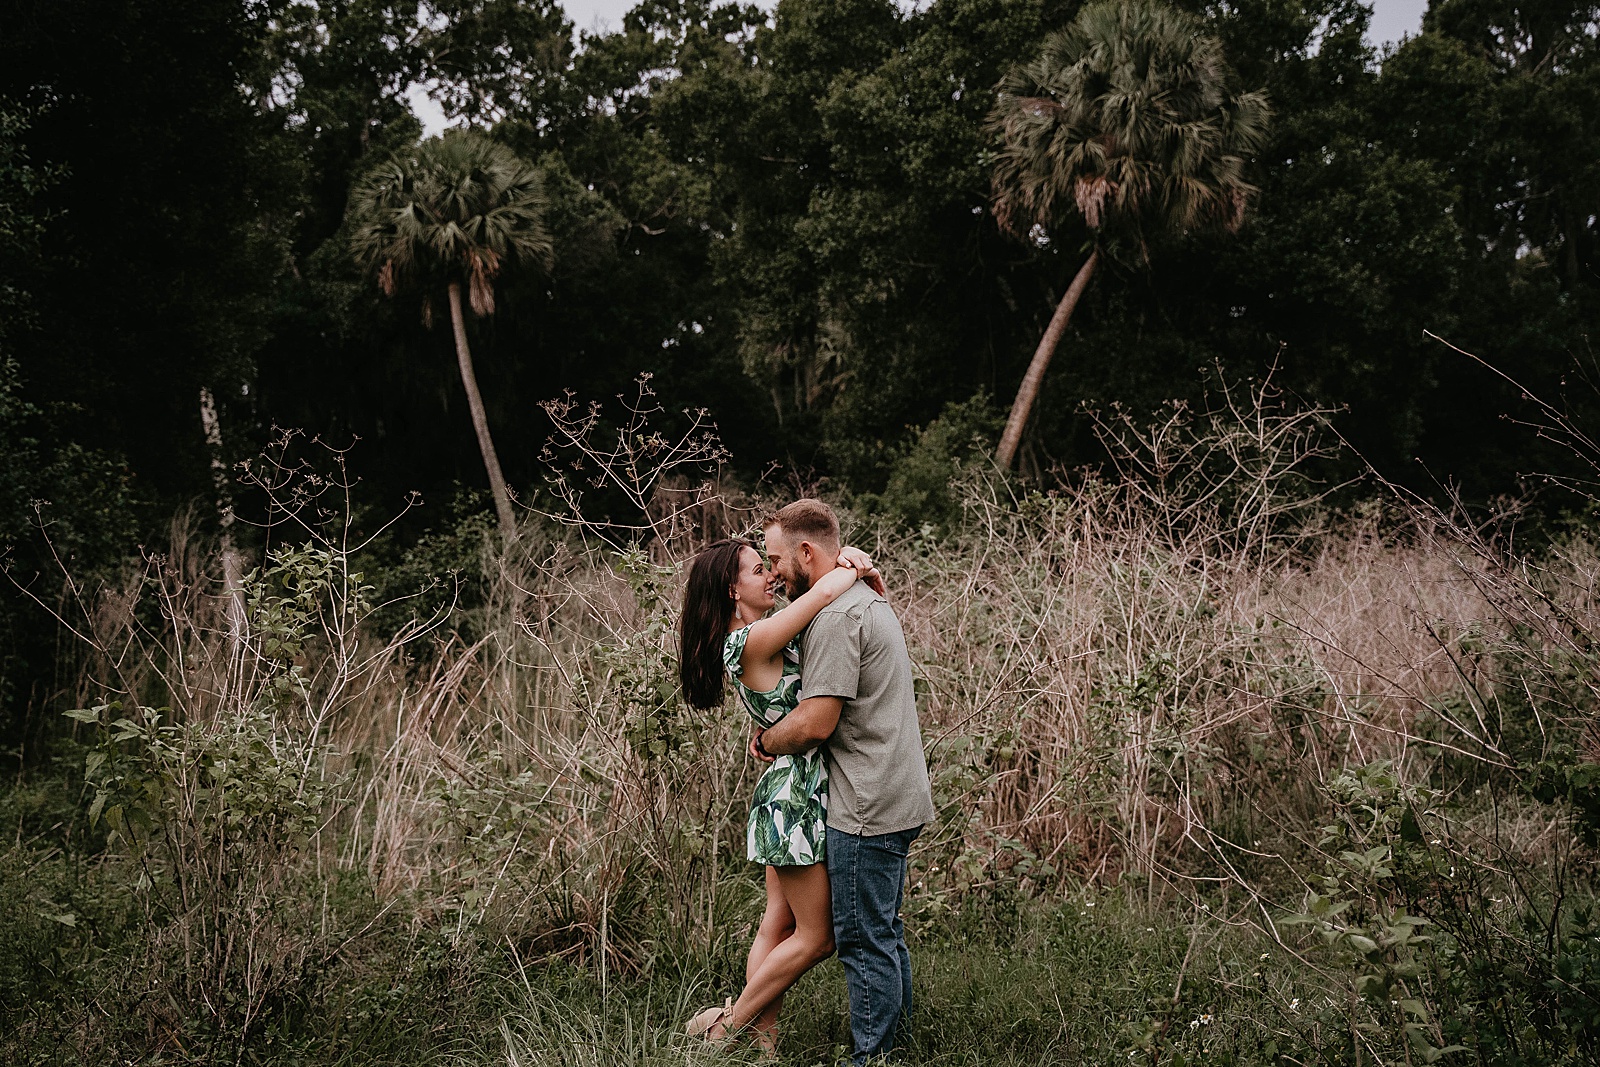 Riverbend Park Jupiter FL Engagement Photos by South Florida Engagement Photographer, Krystal Capone Photography